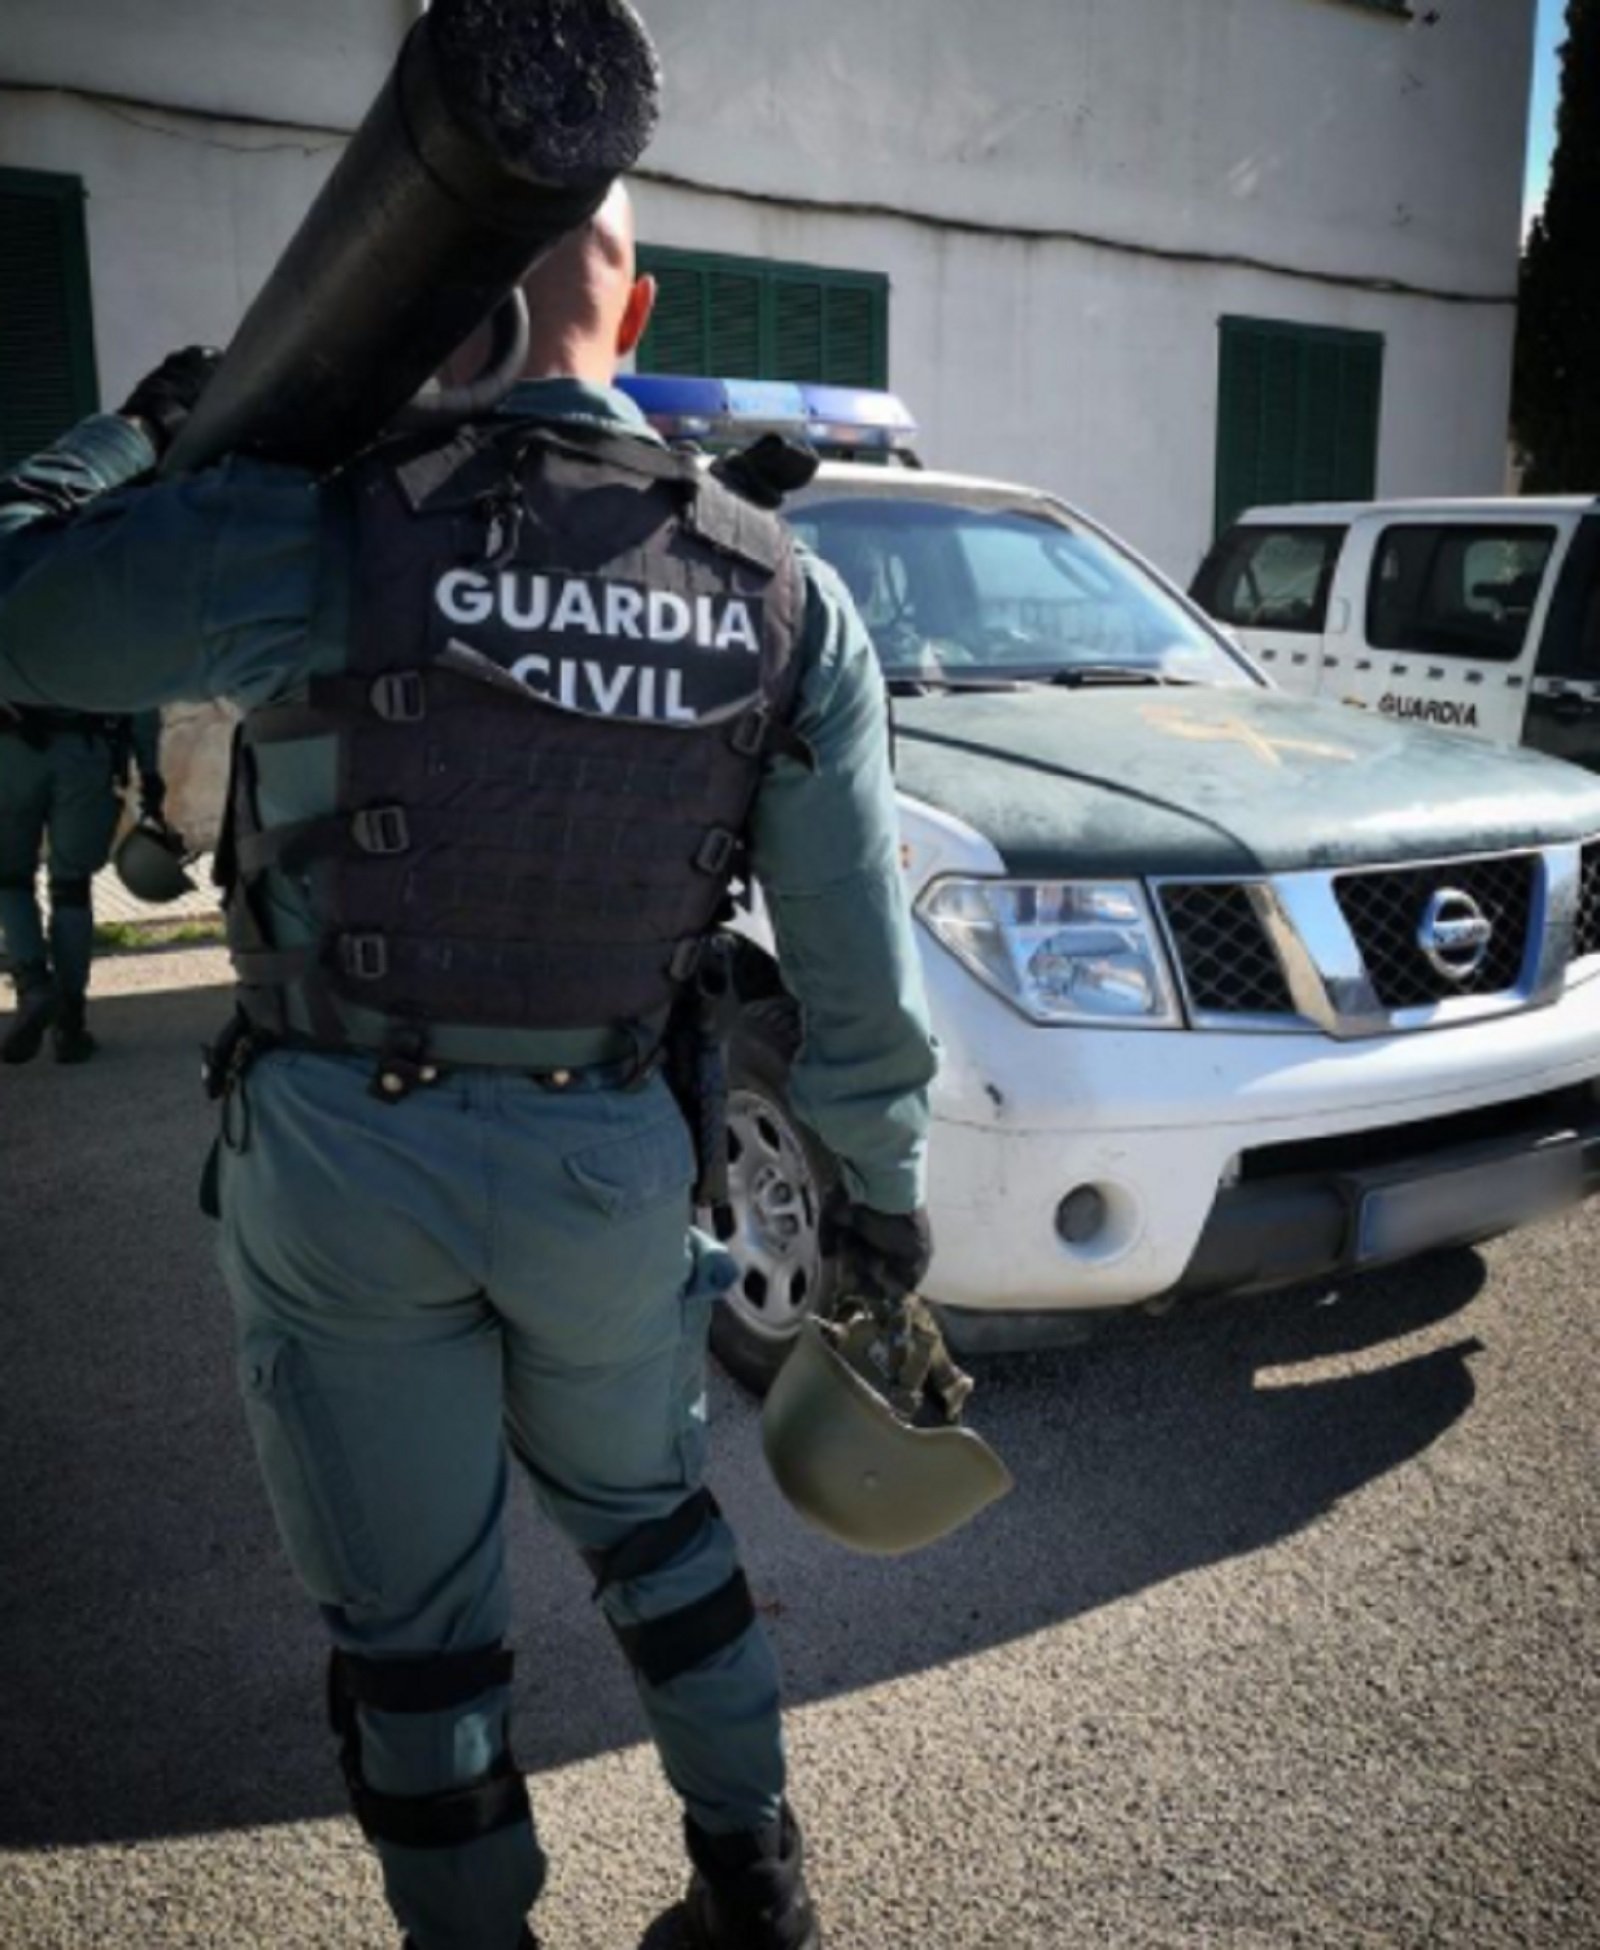 Un guàrdia civil increpa un ciutadà per parlar català: “Maleducat”